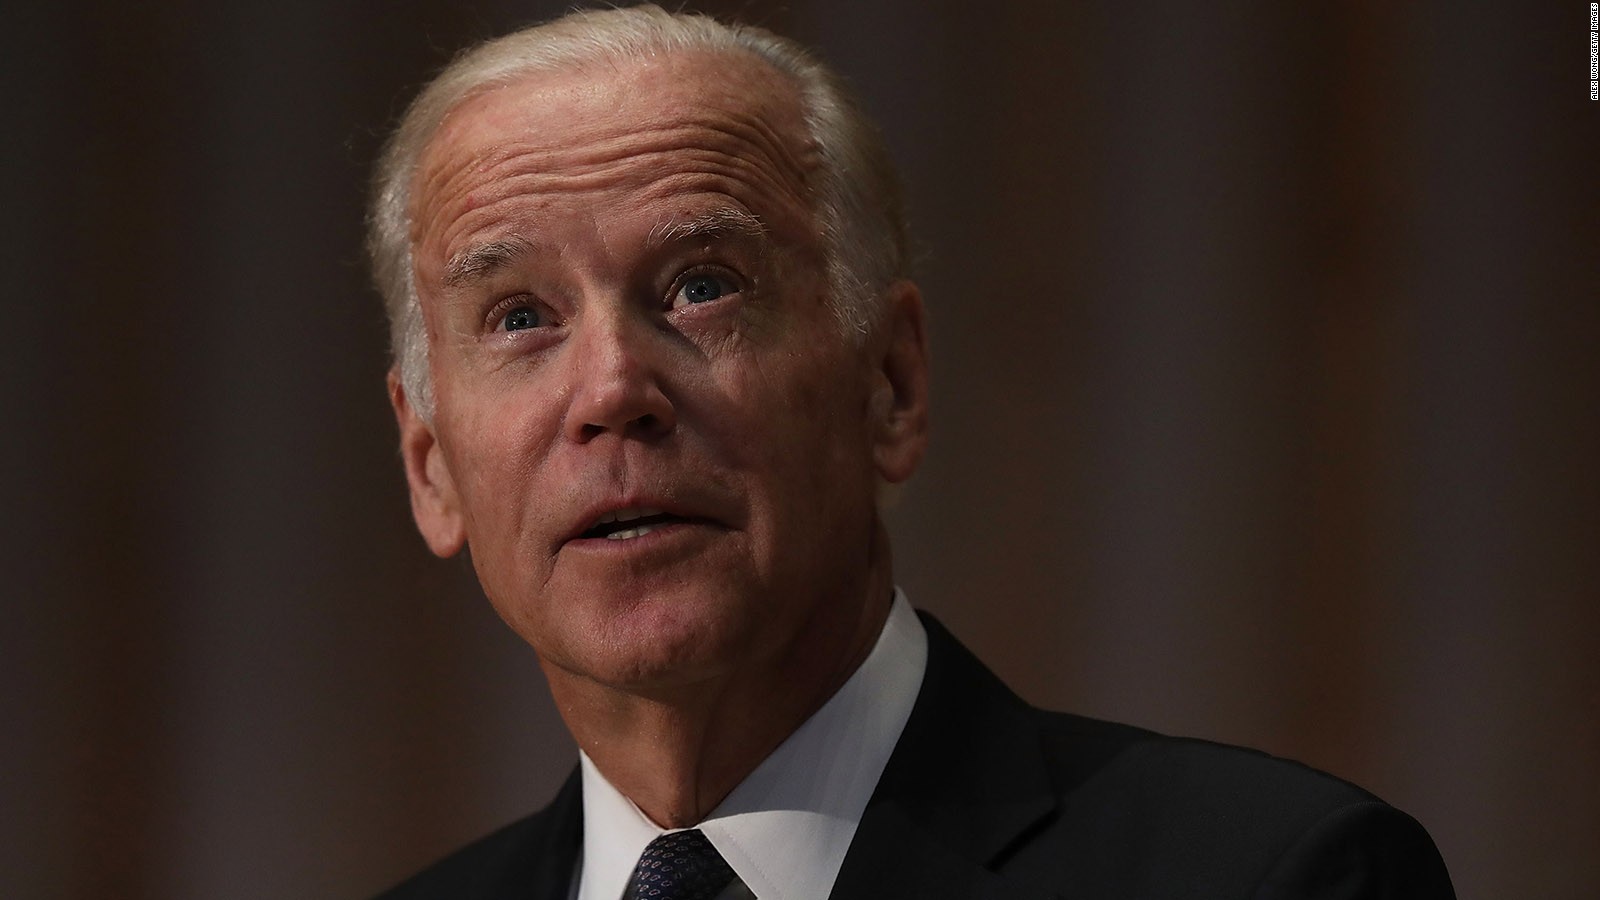 Joe Biden says he could've won if he ran for president in 2016